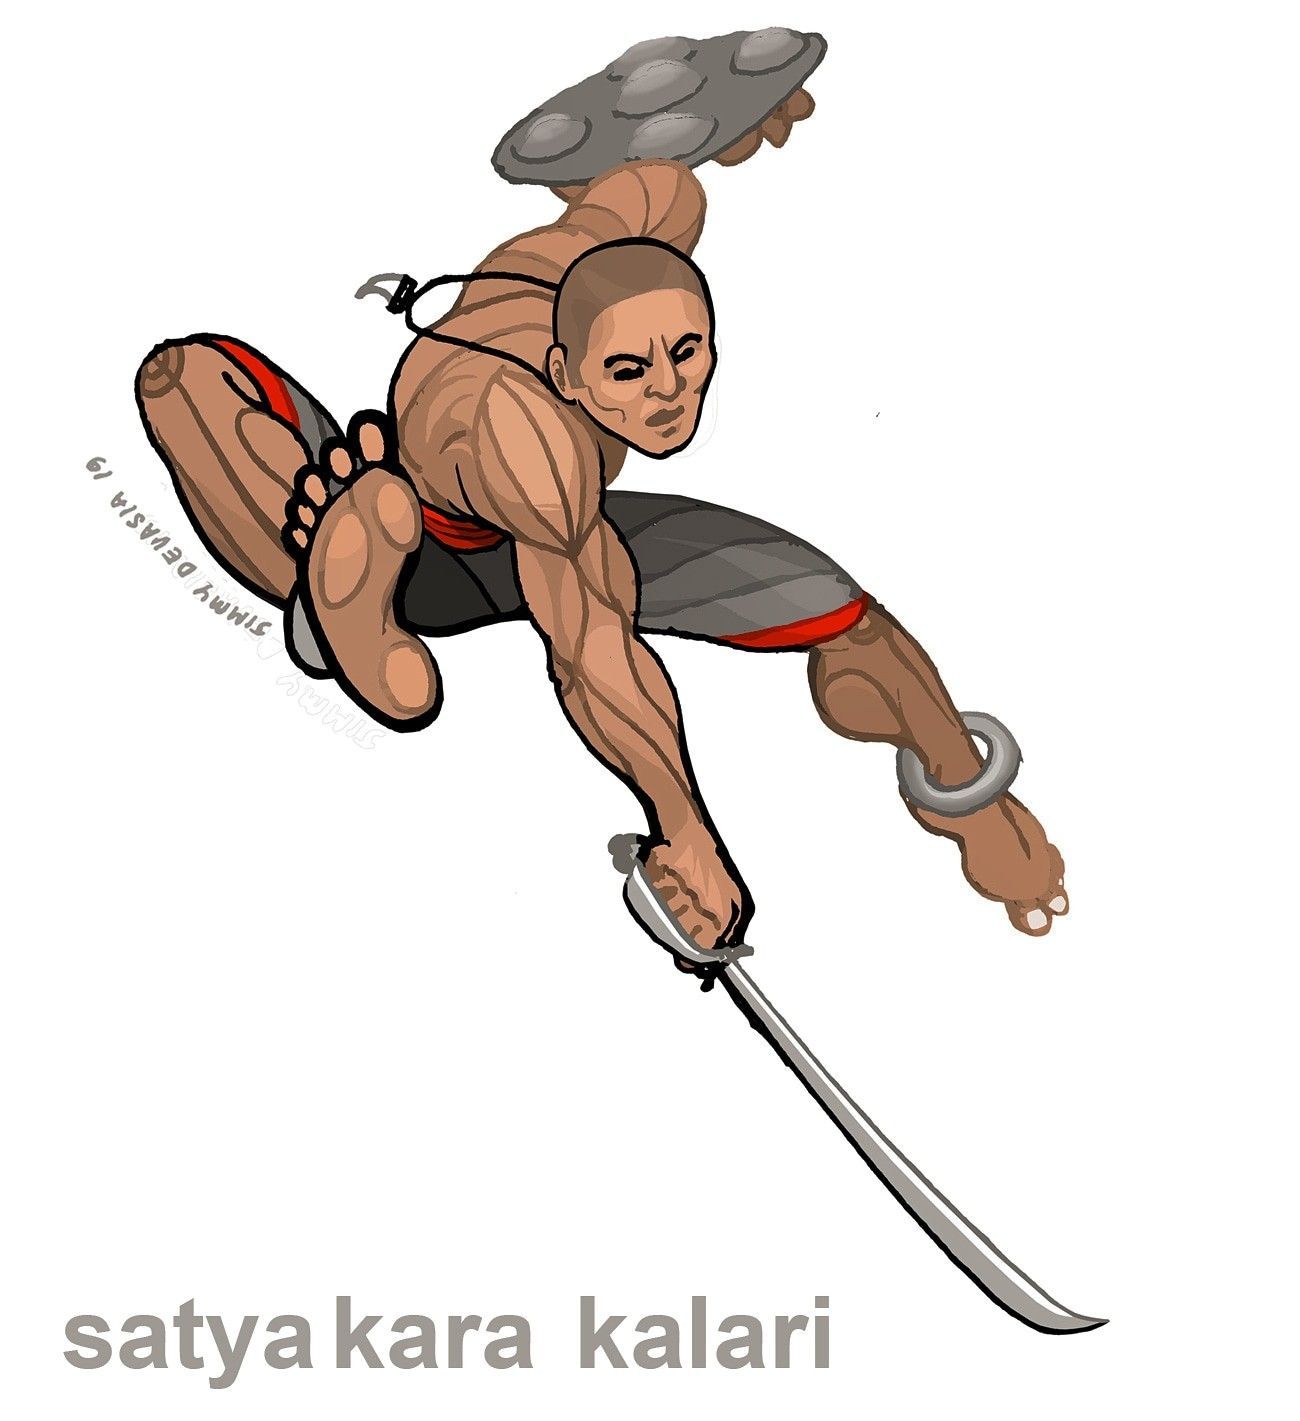 Kalari drawing. Indian martial arts, Indian art paintings, Art reference photo